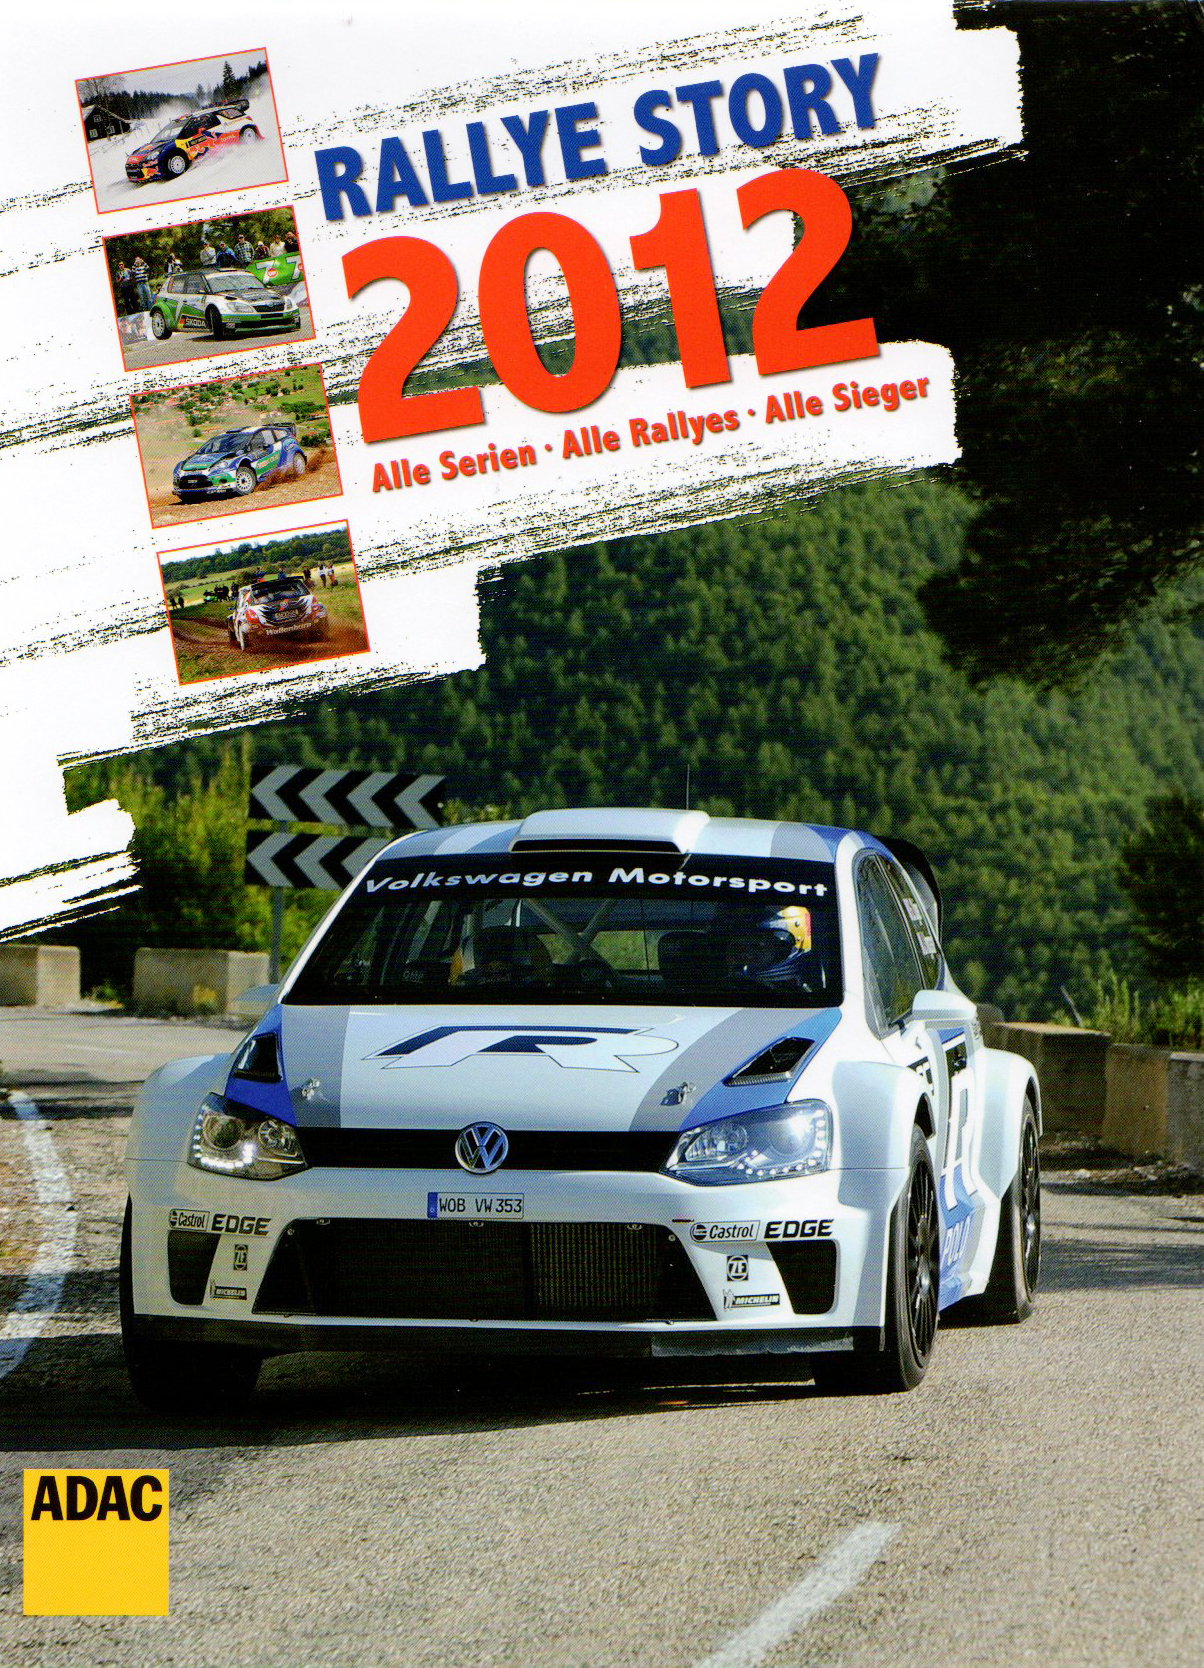 Rallye Story 2012